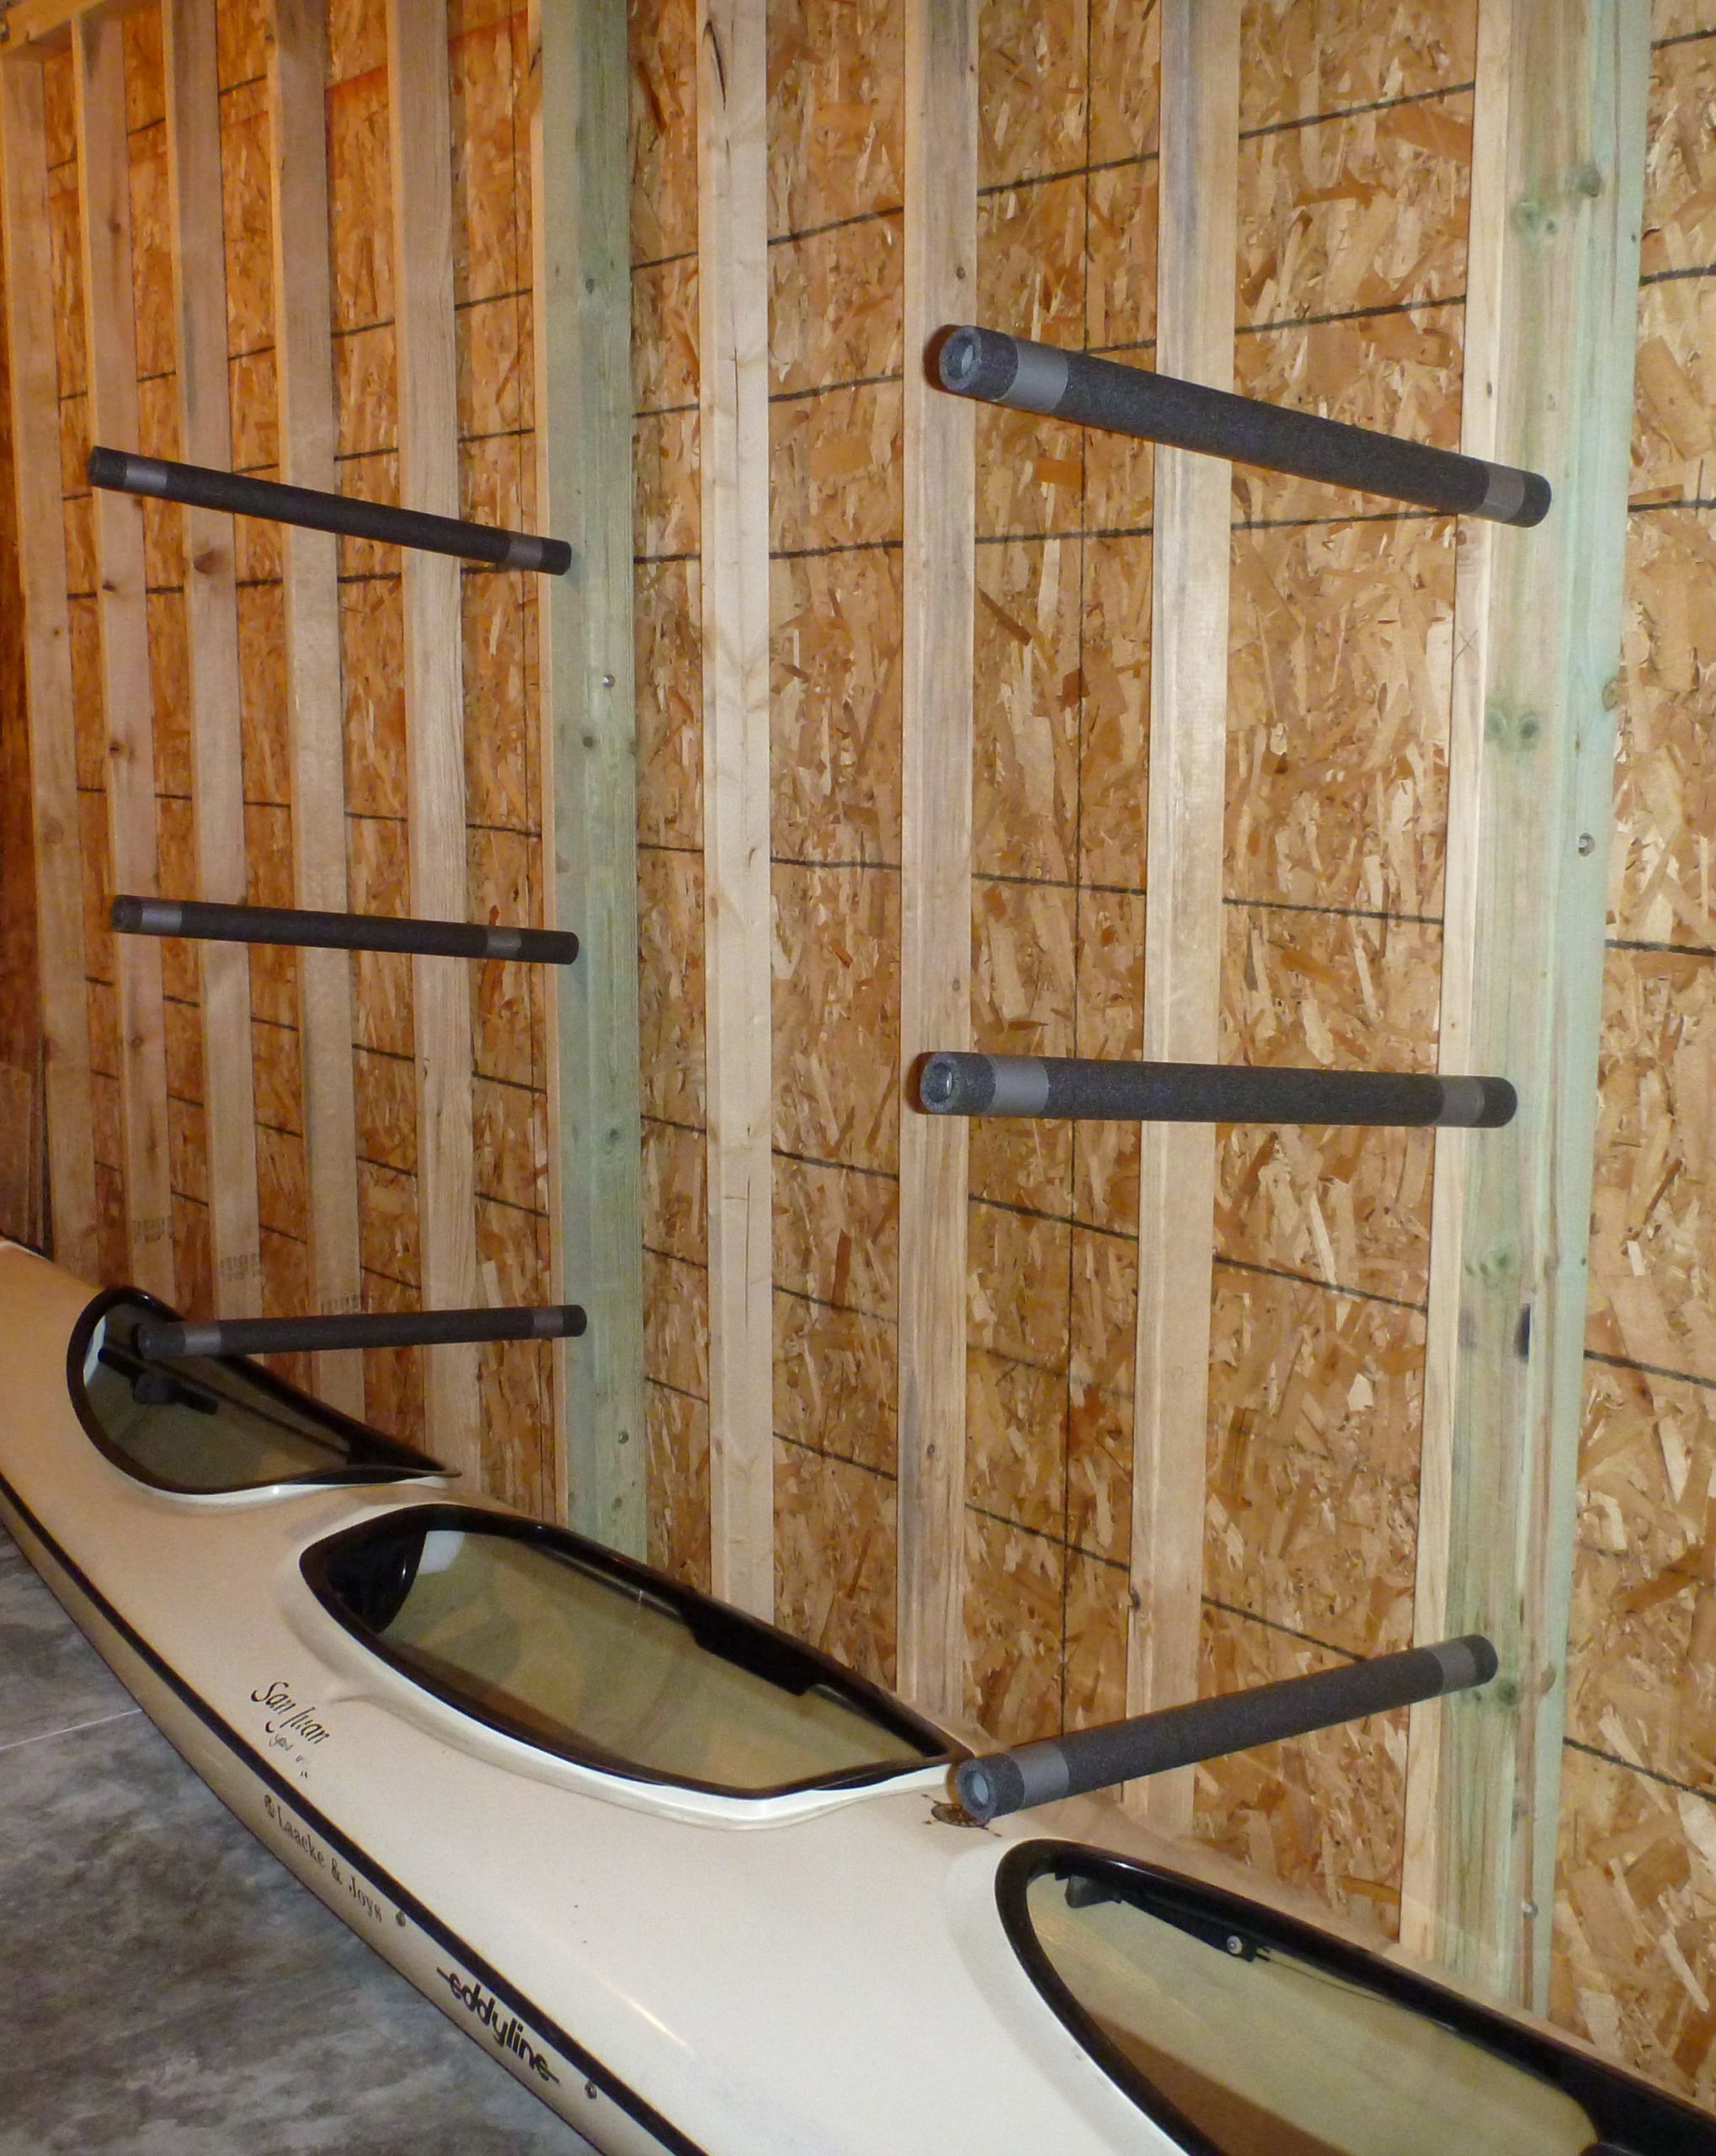 DIY Kayak Wall Rack
 Building Kayak Racks